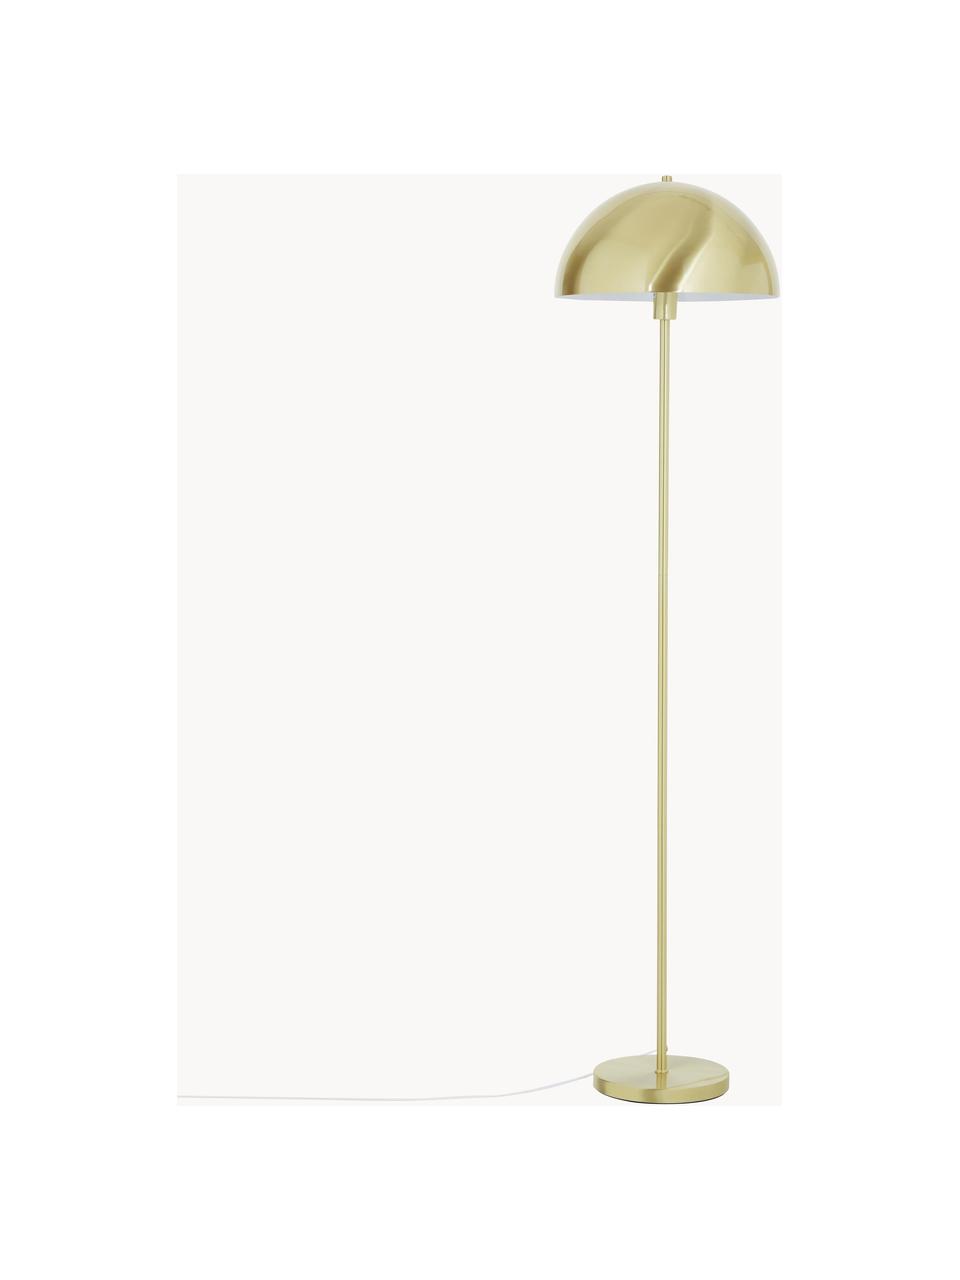 Stehlampe Matilda, Lampenschirm: Metall, gebürstet, Lampenfuß: Metall, vermessingt, Messingfarben, H 164 cm